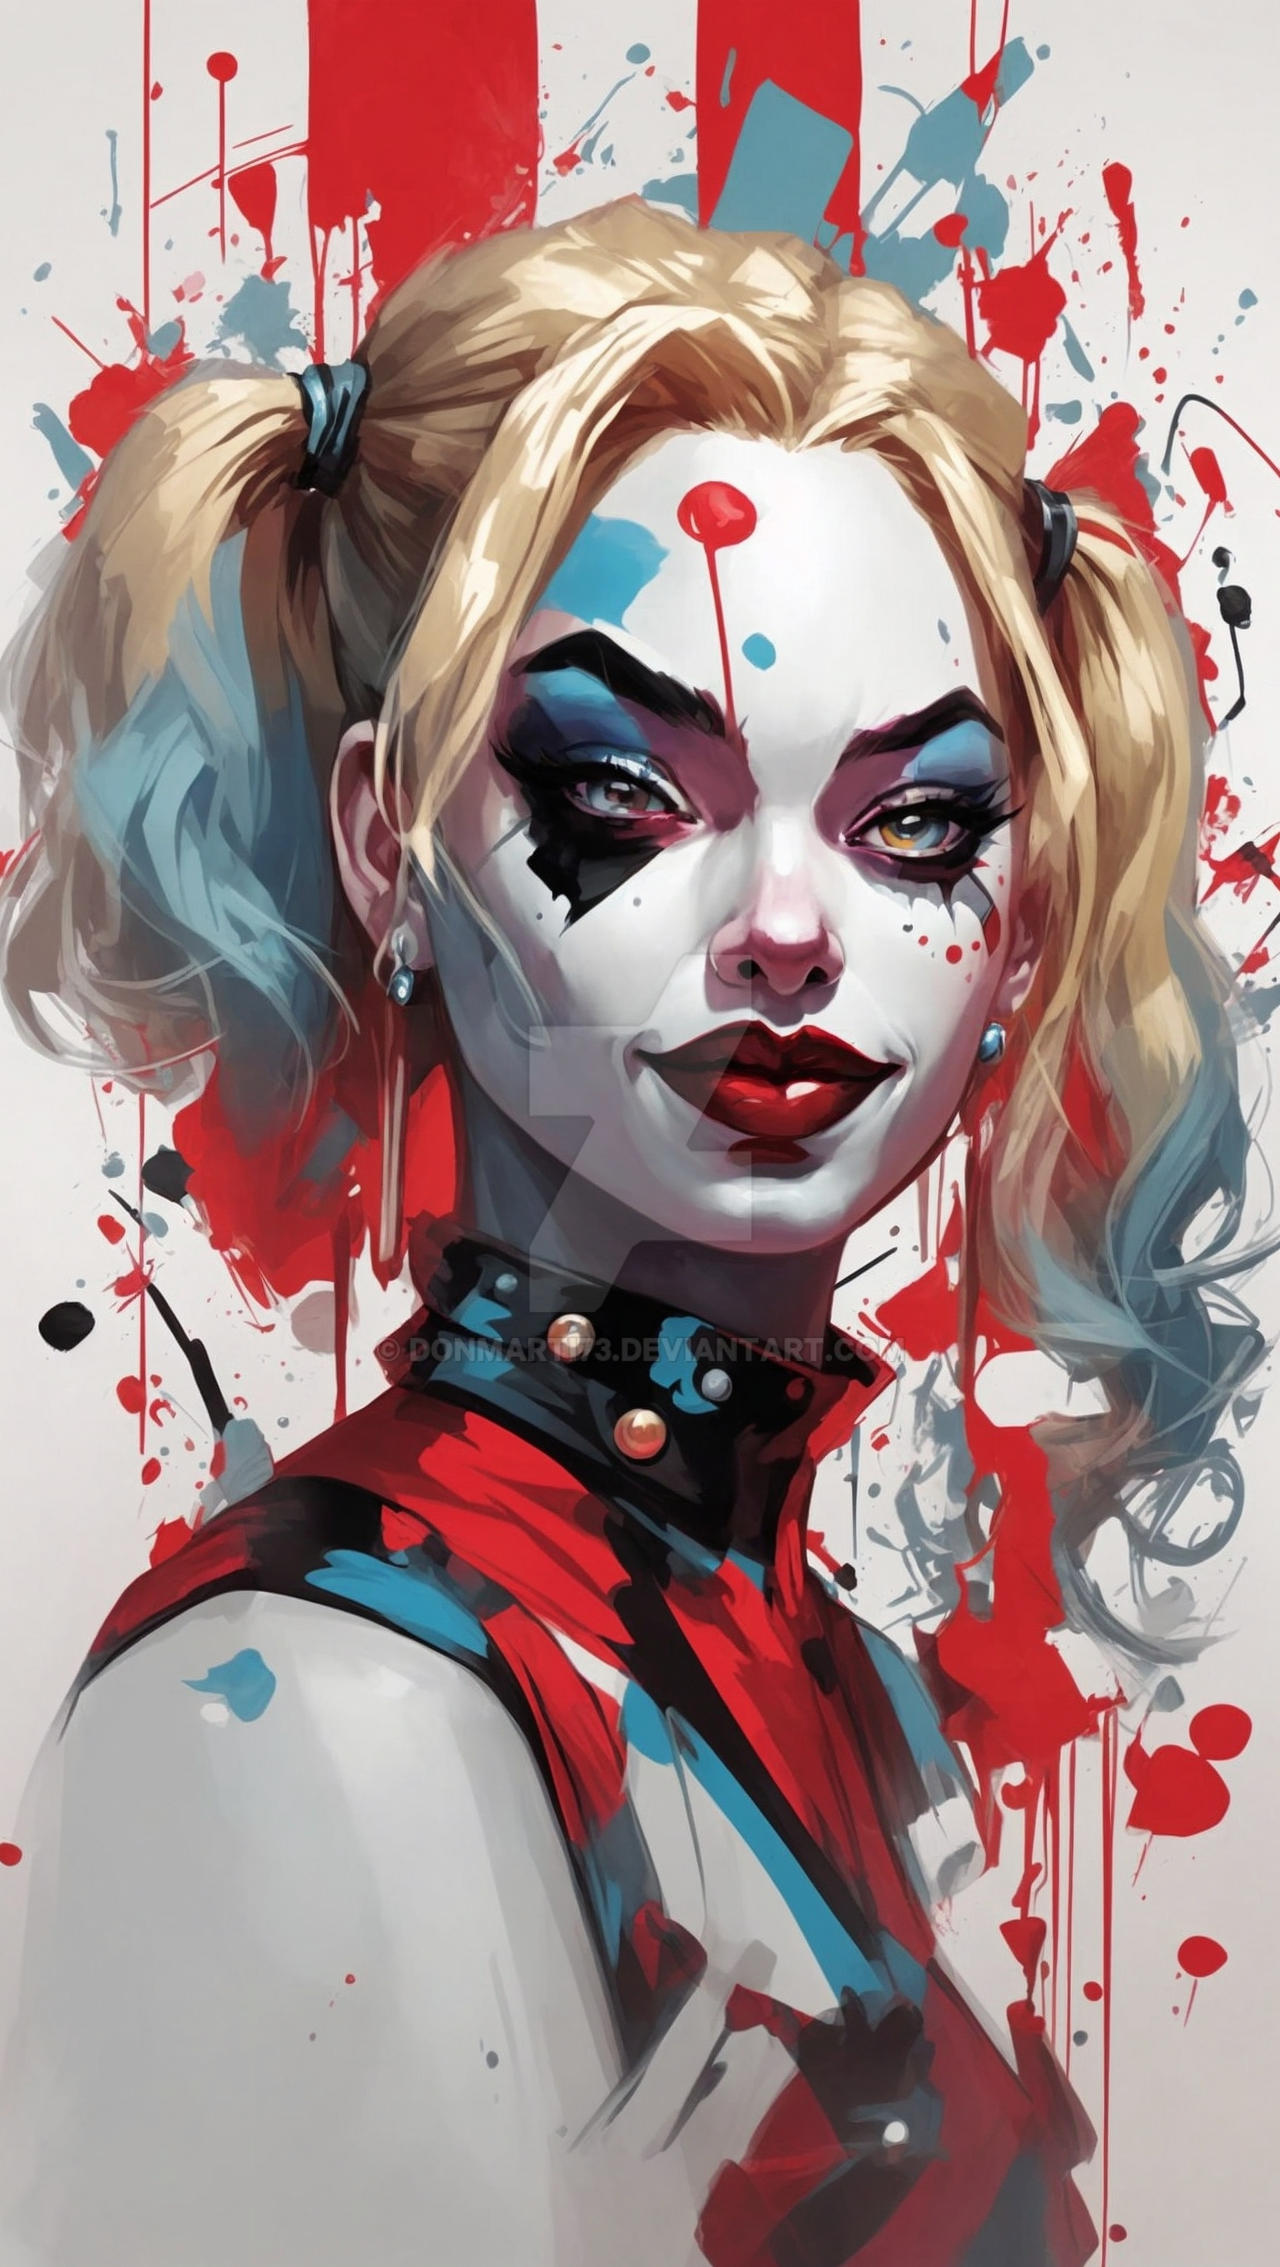 Meet Harley Quinn 3 by DonMarti73 on DeviantArt